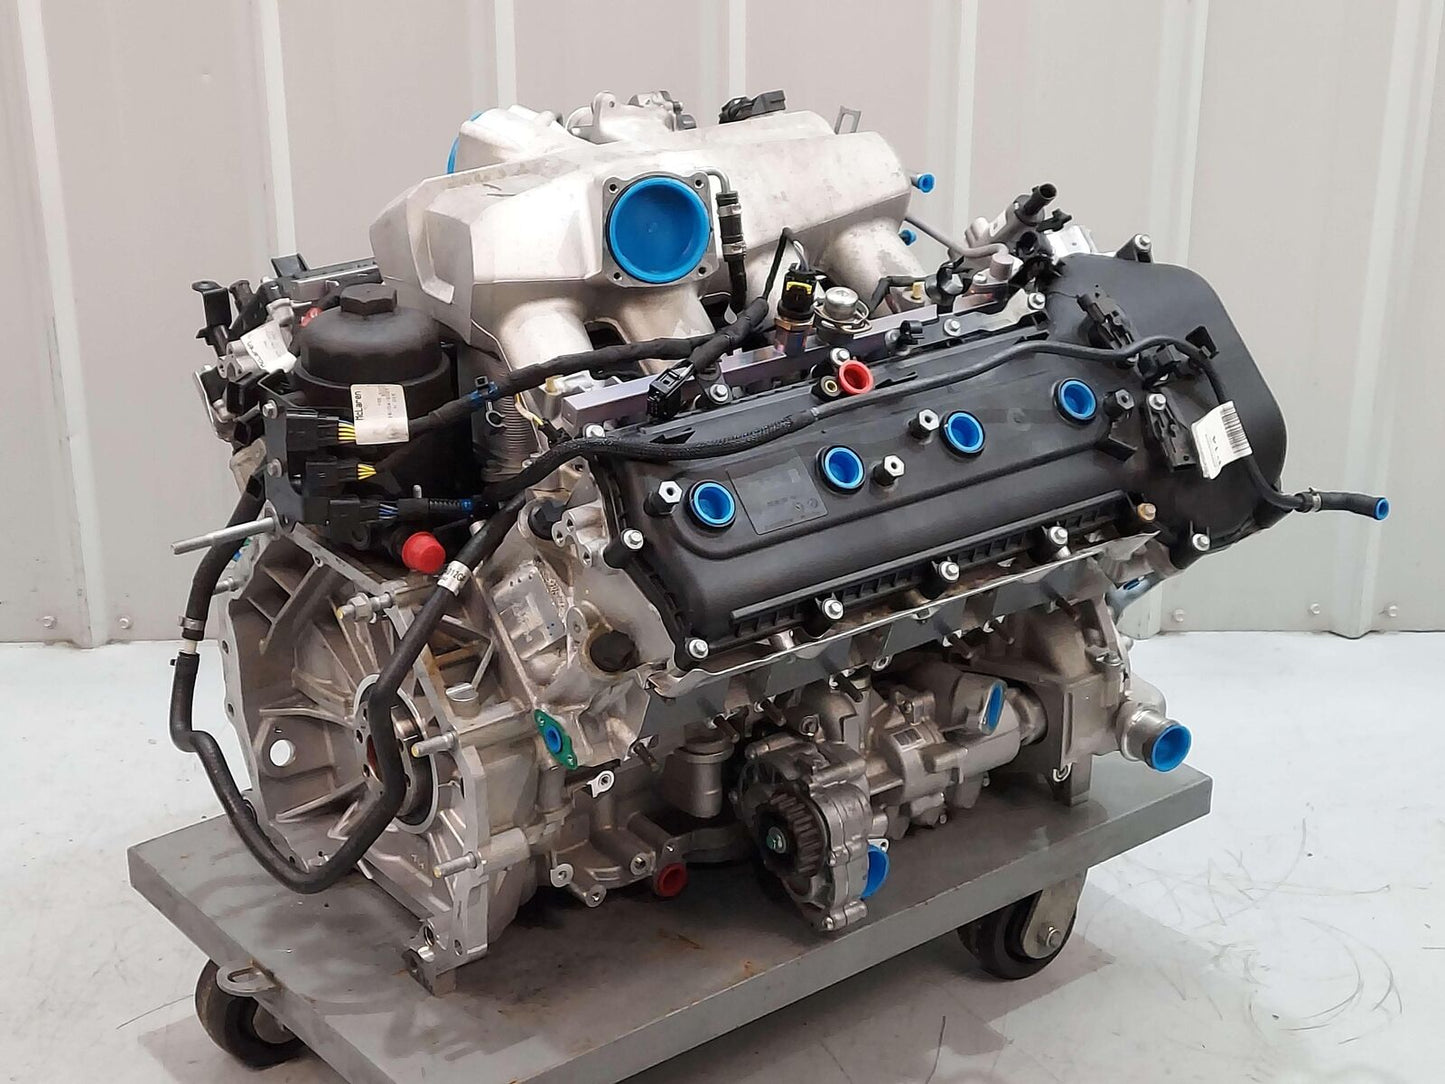 2021 MCLAREN GT ENGINE MOTOR 4.0L M840TE 7466 MILES RUNS PERFECT GT ONLY